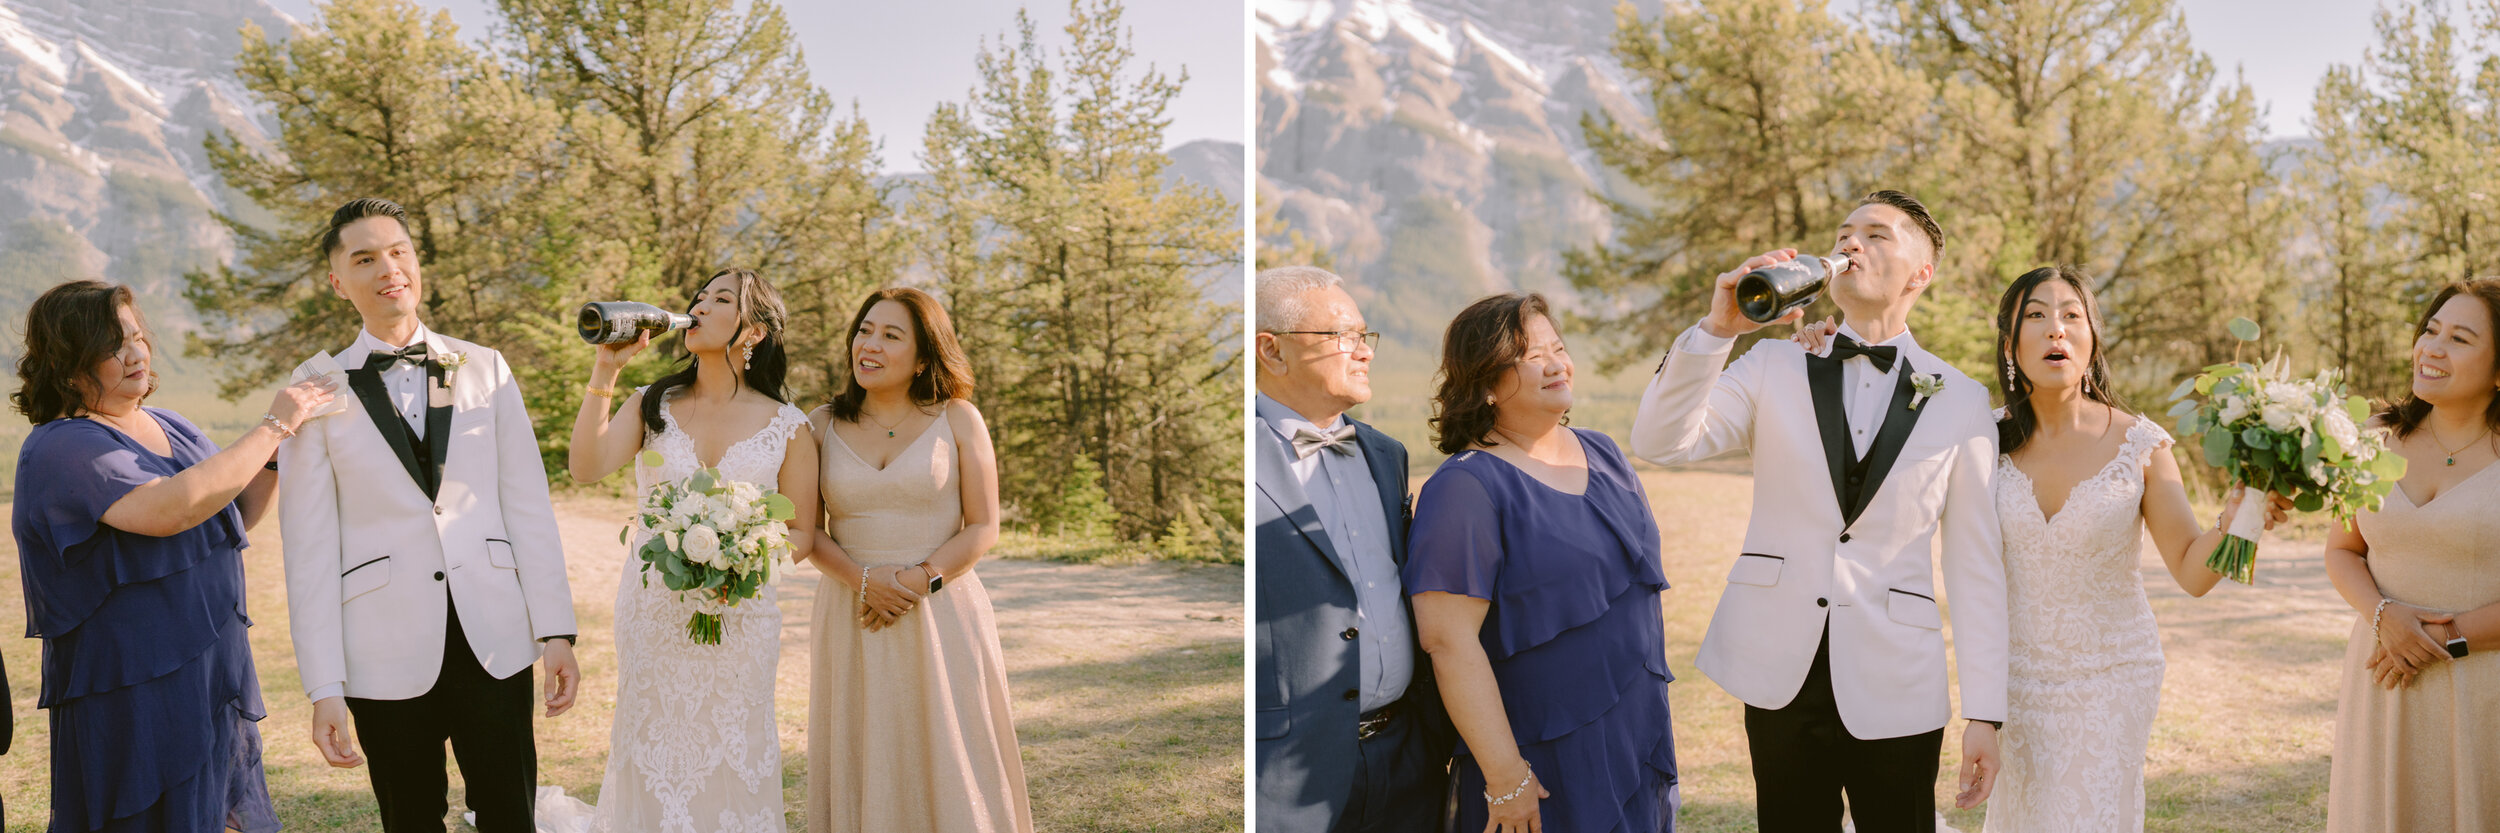 Banff-wedding-photographer-7.jpg